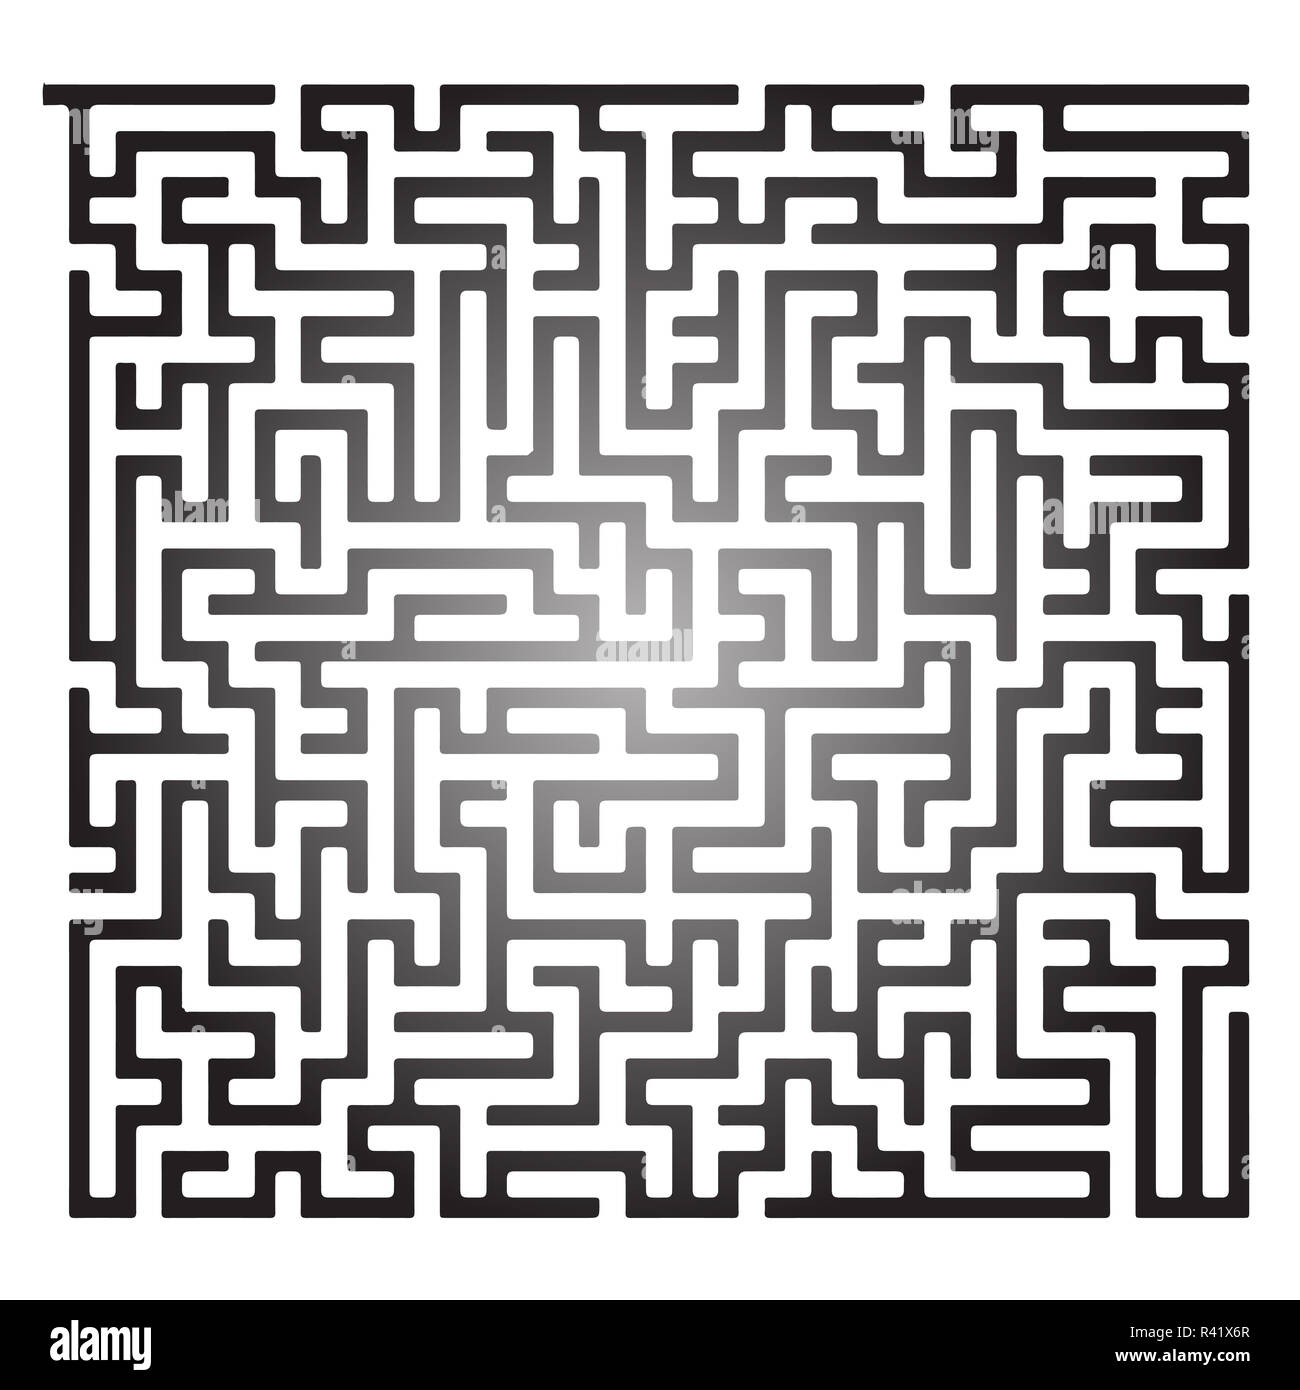 Labyrinth Isolated on White Background Stock Photo